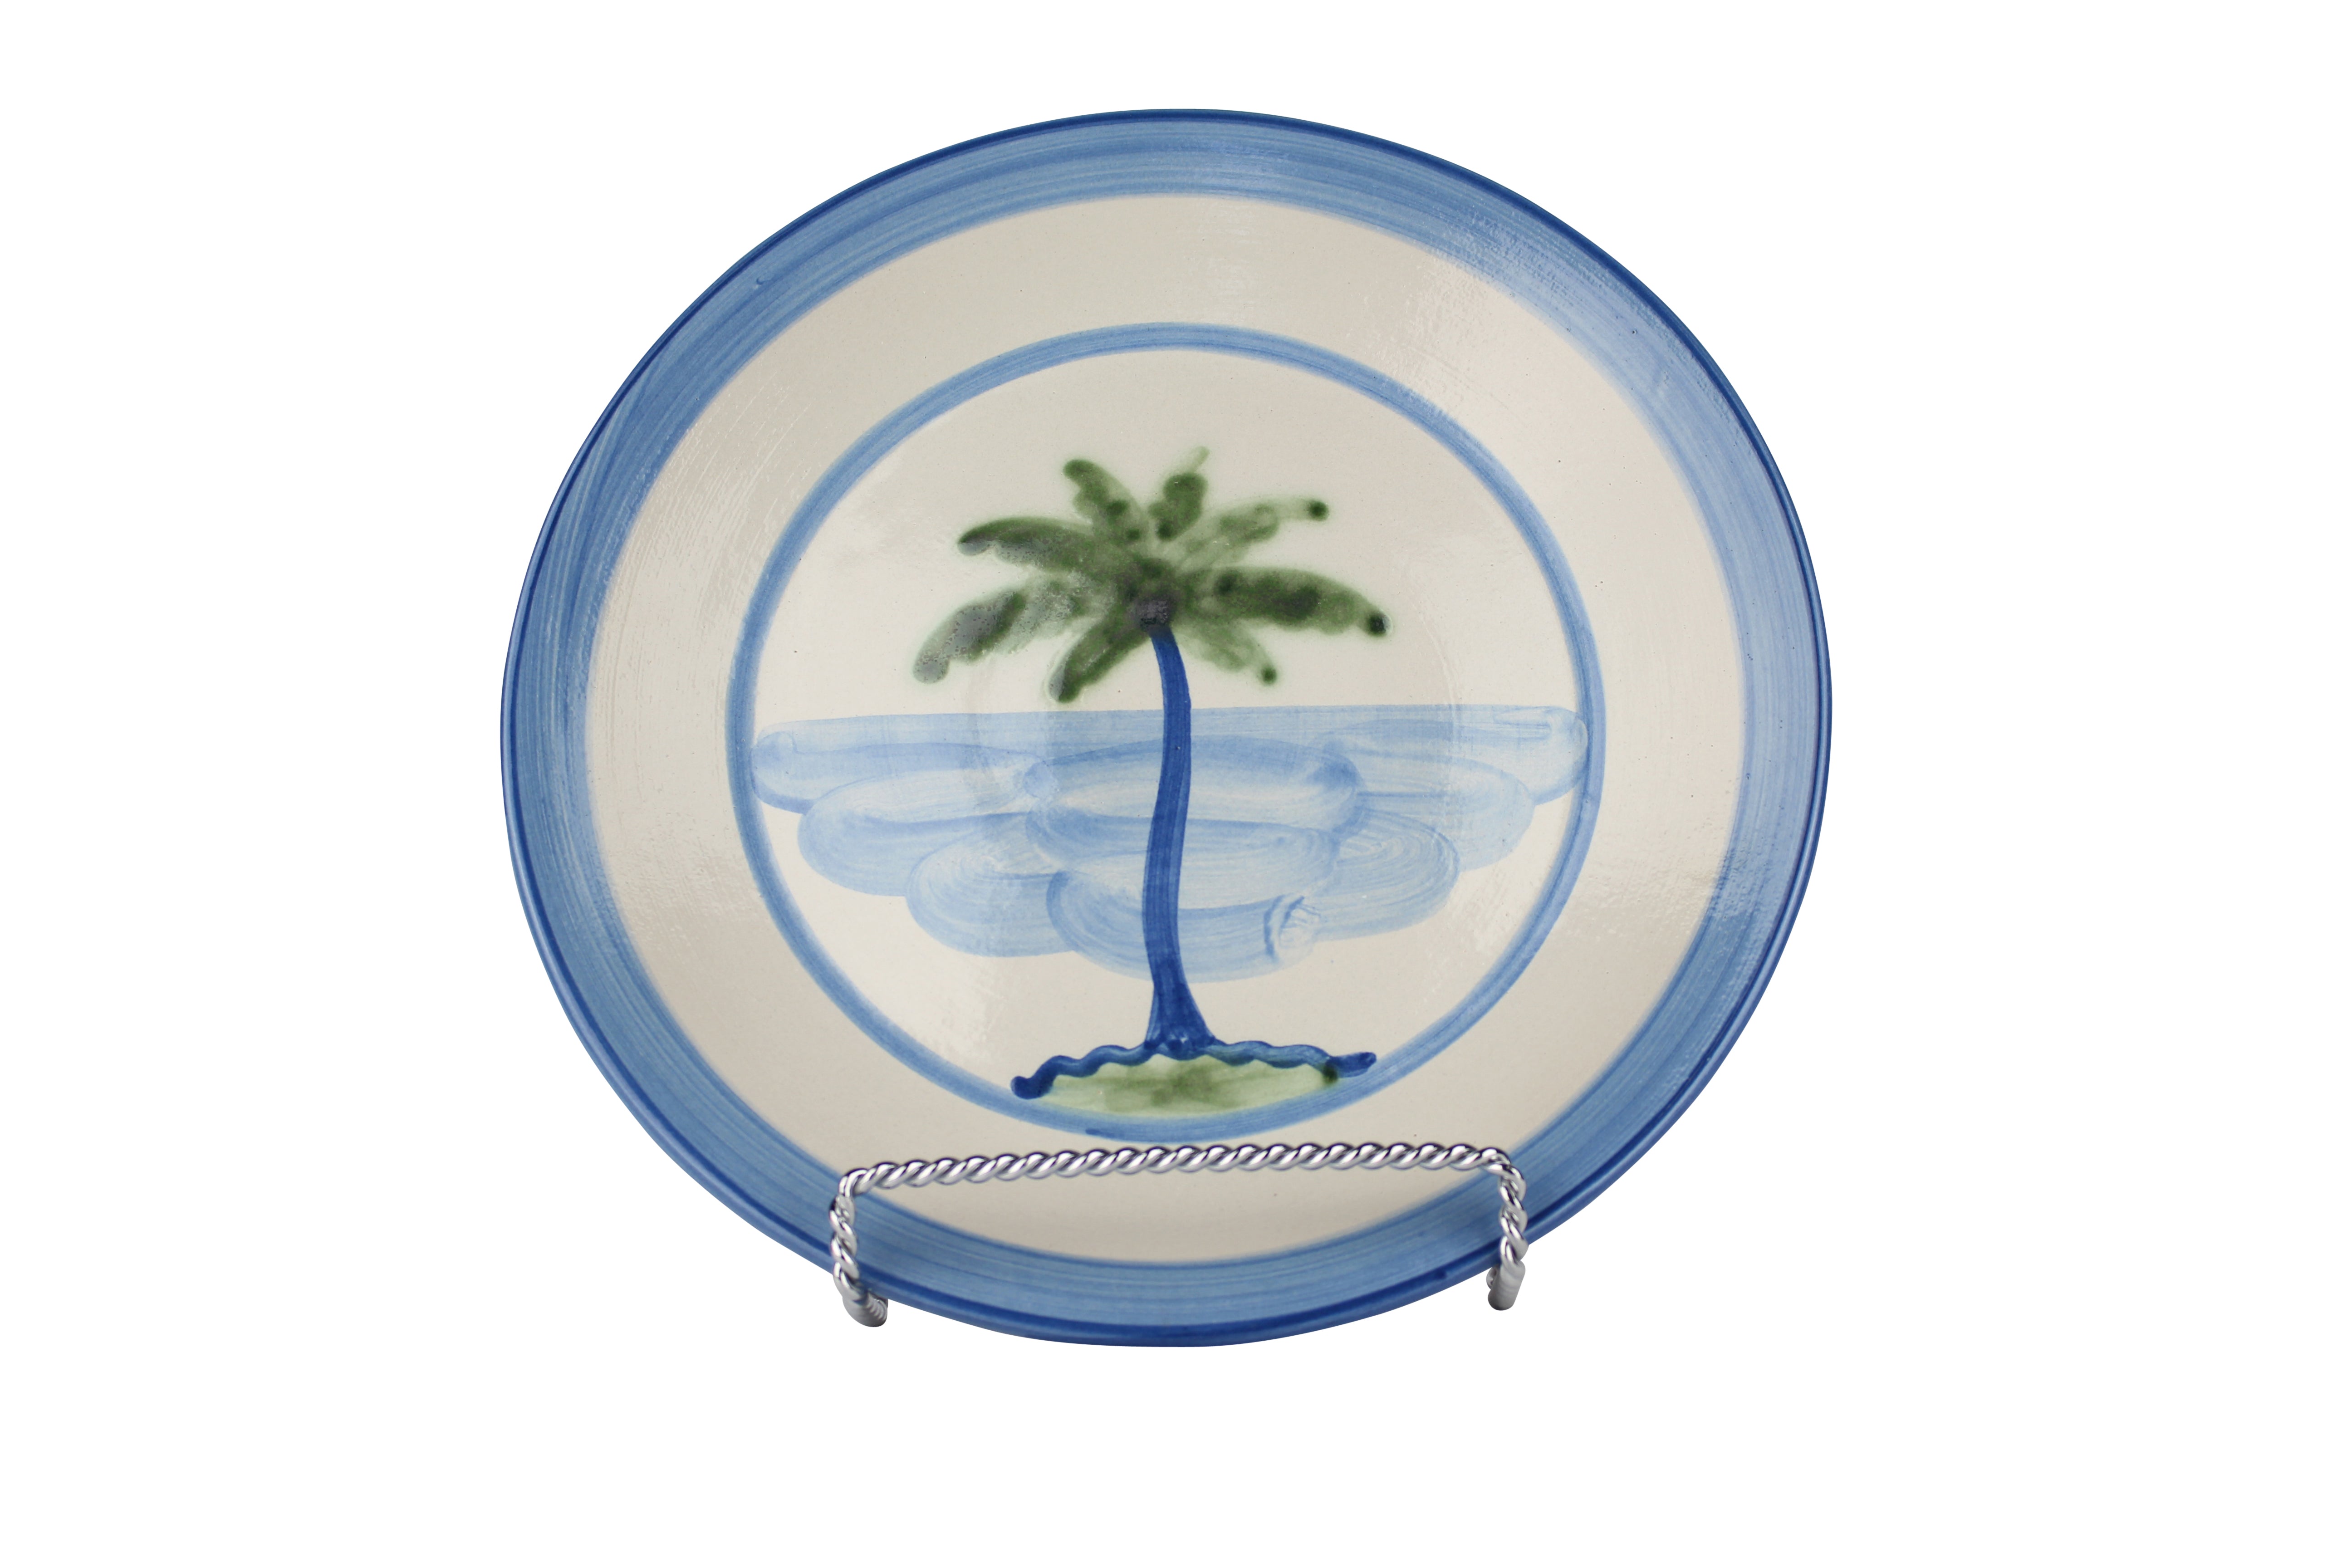 11" Dinner Plate - Palm Tree